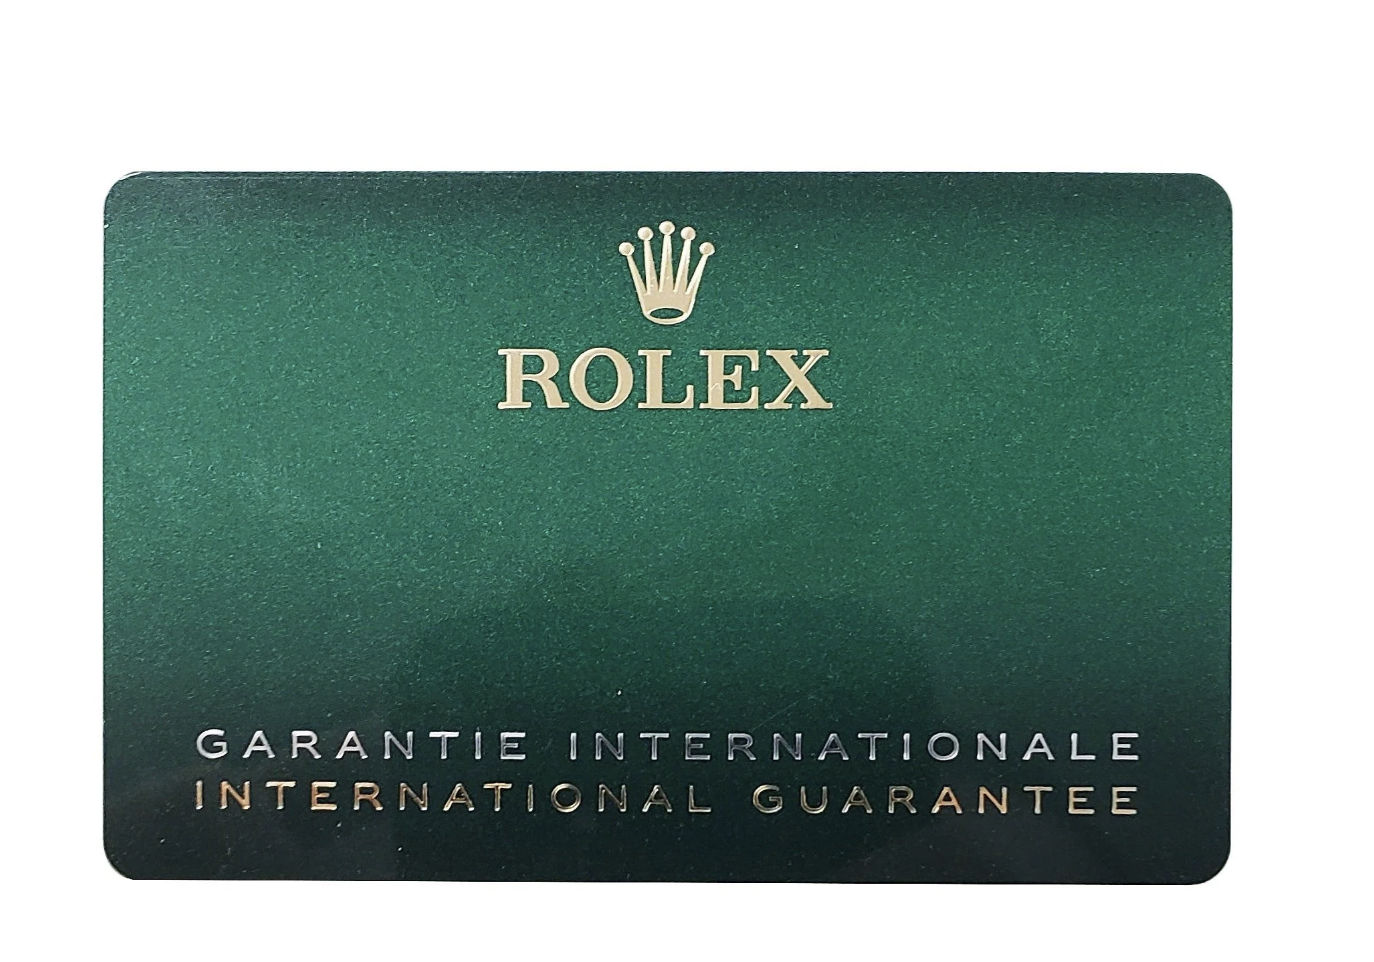 MINT Rolex GMT-Master II PAPERS Black 40mm Ceramic Steel Date Watch 116710 B+P